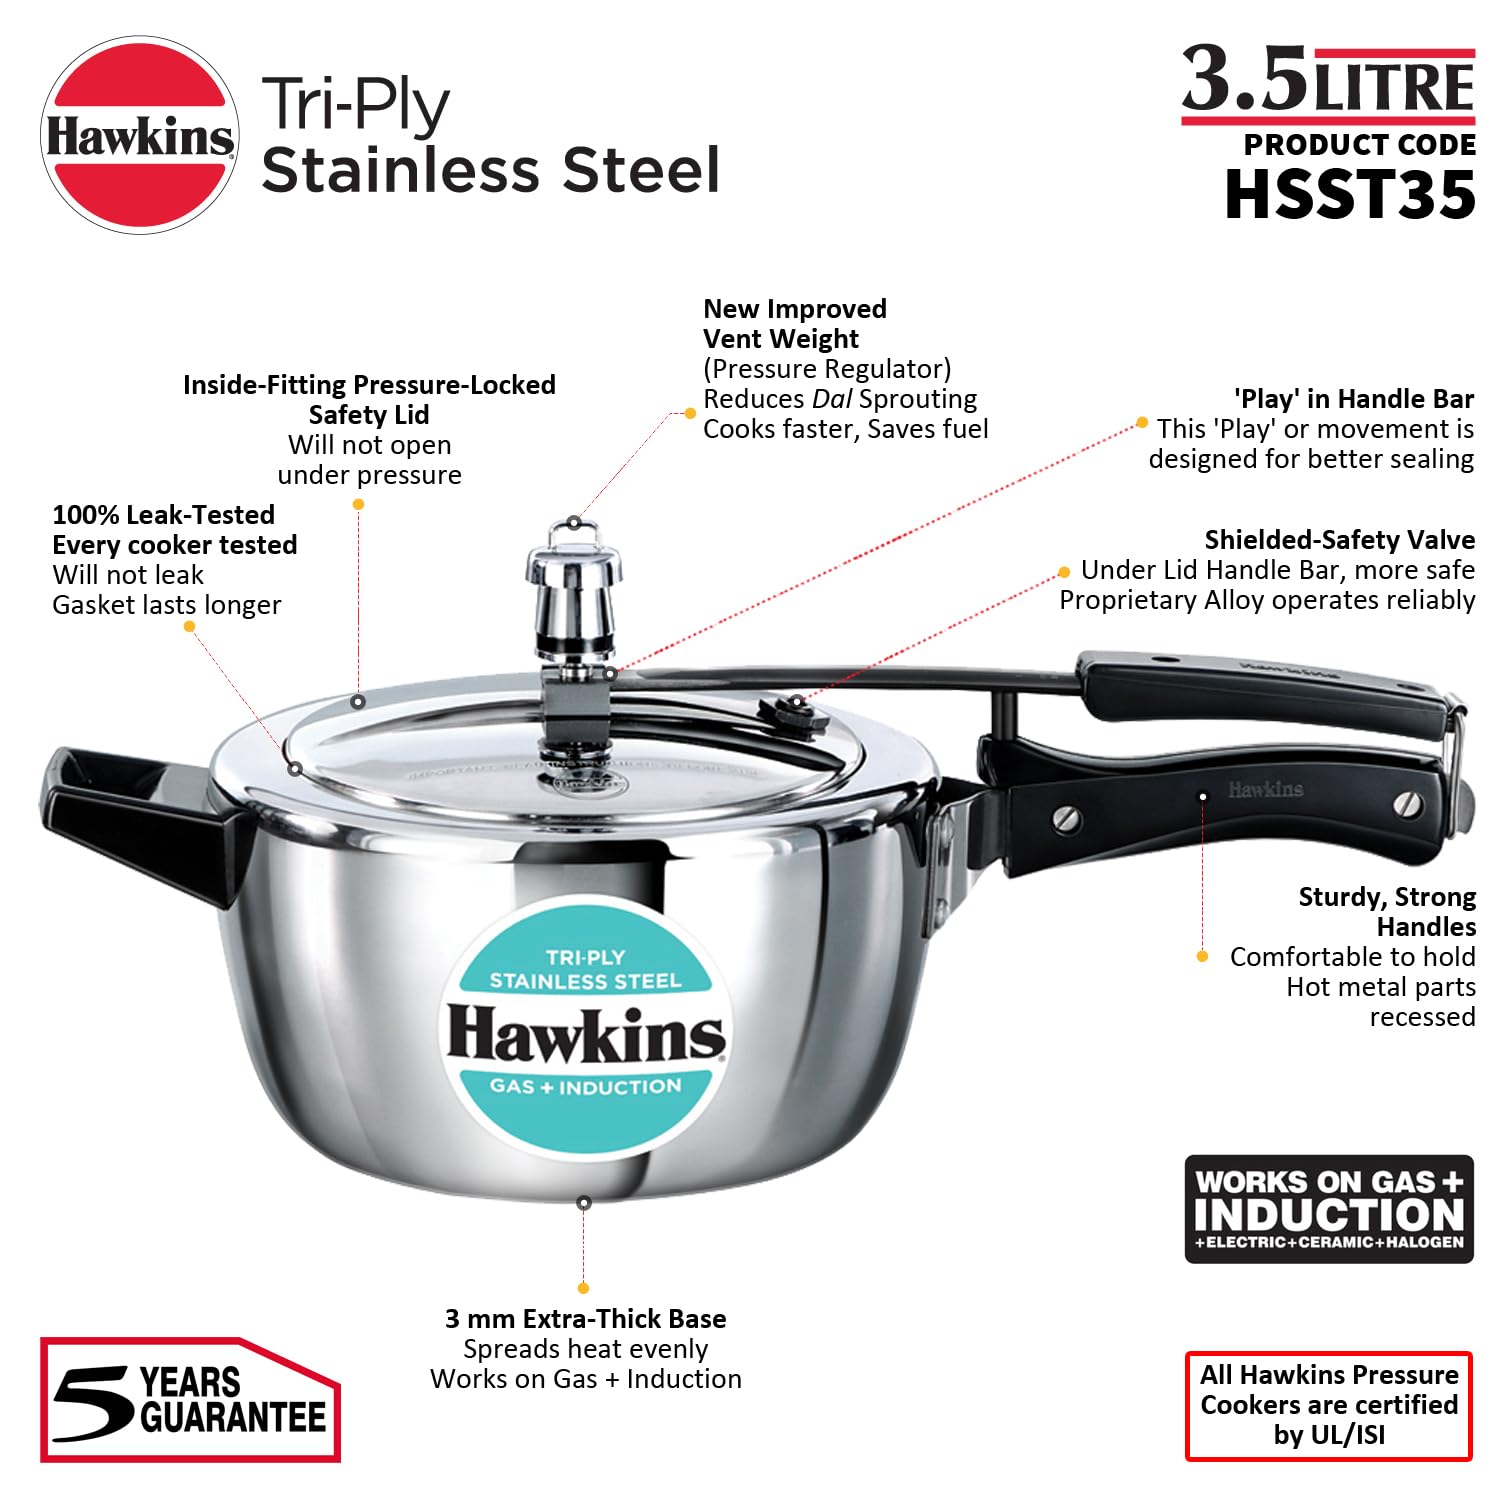 Hawkins 3.5 Litre Triply Stainless Steel Pressure Cooker, Inner Lid Cooker, Silver (HSST35)